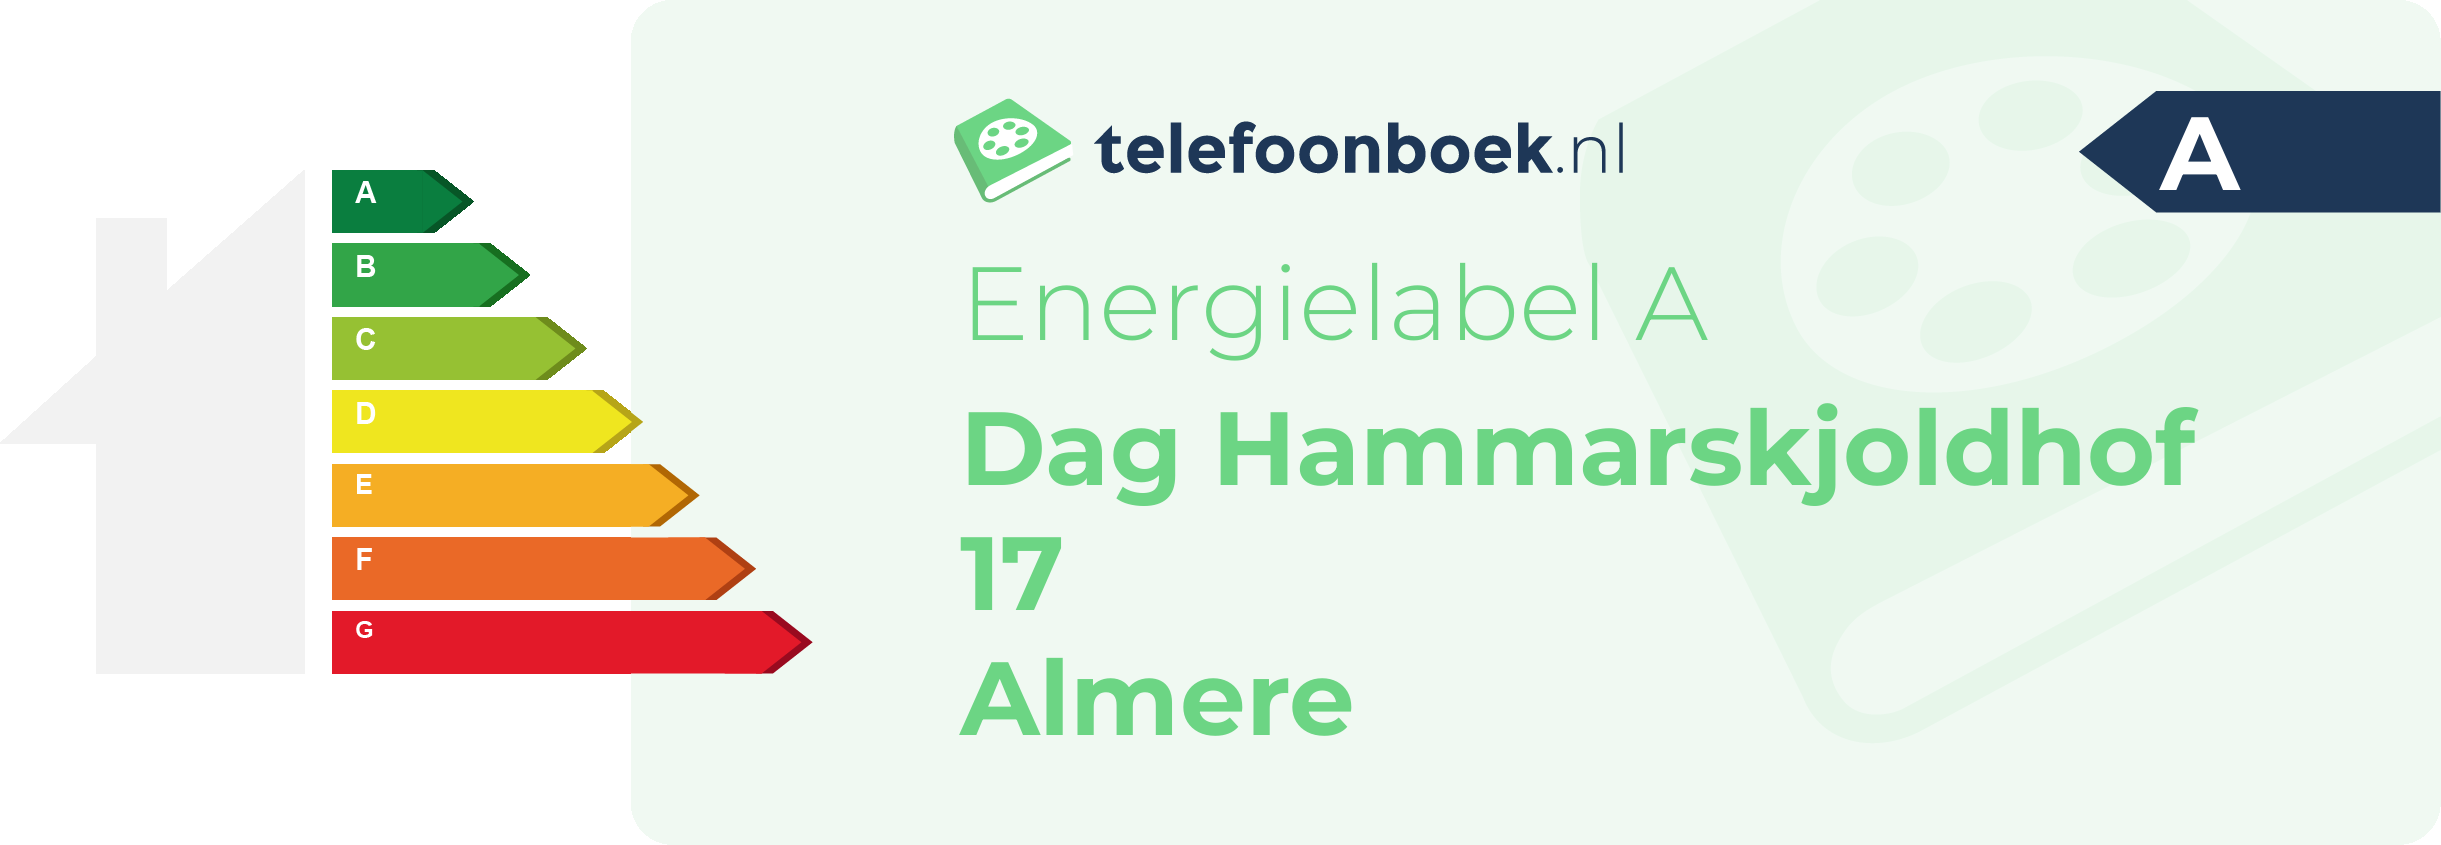 Energielabel Dag Hammarskjoldhof 17 Almere